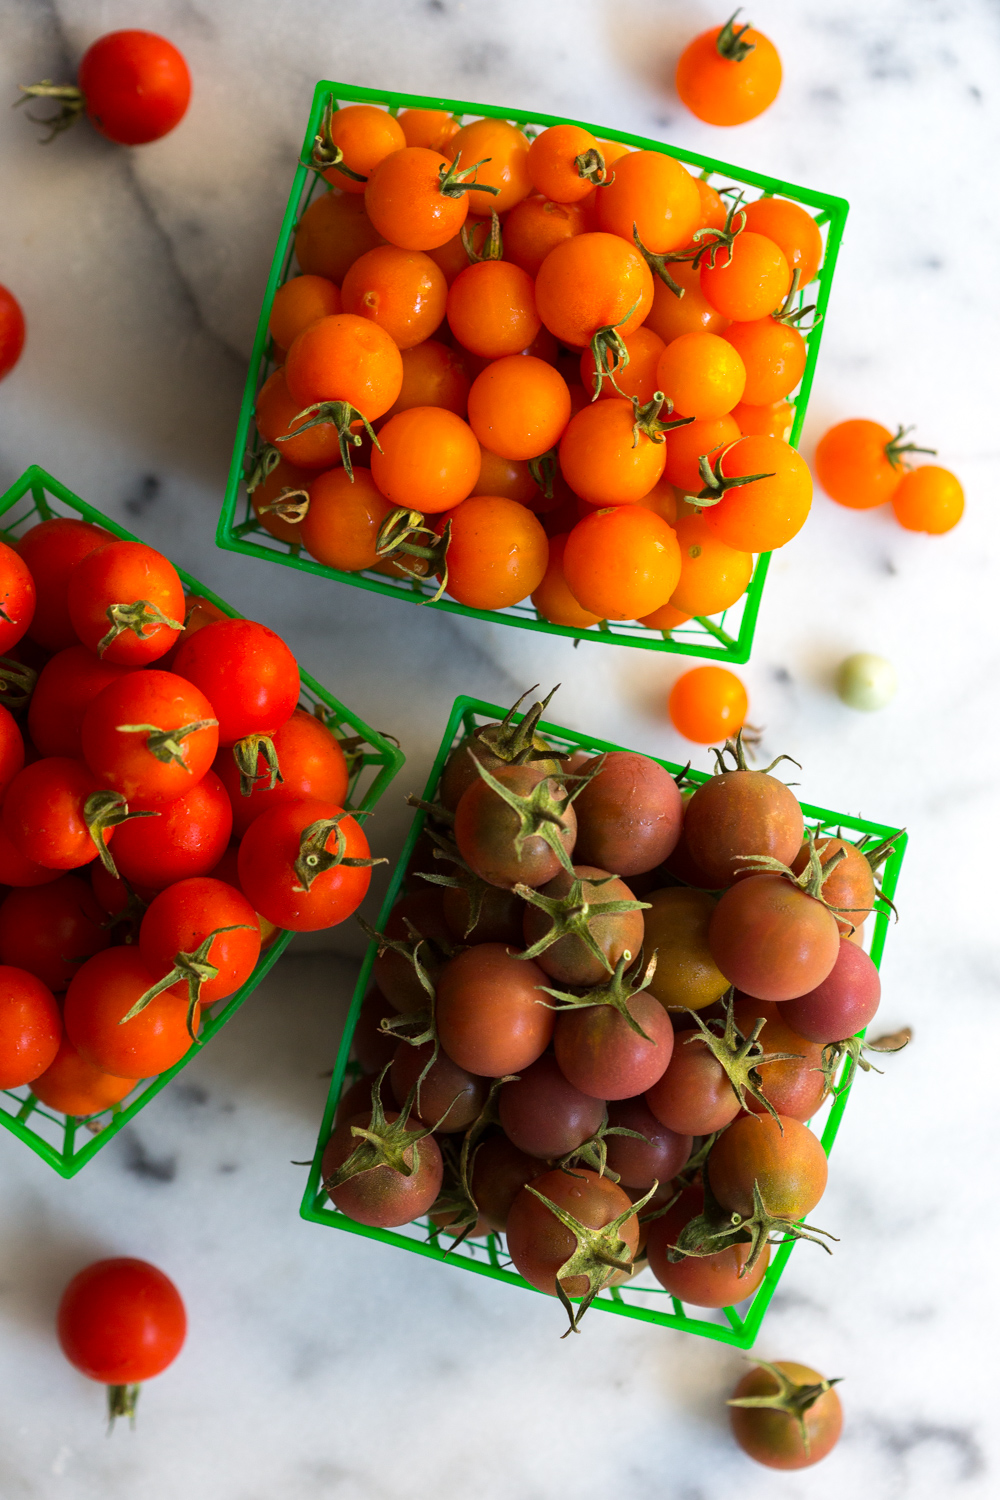 Red, orange, and dark cherry tomatoes in trays